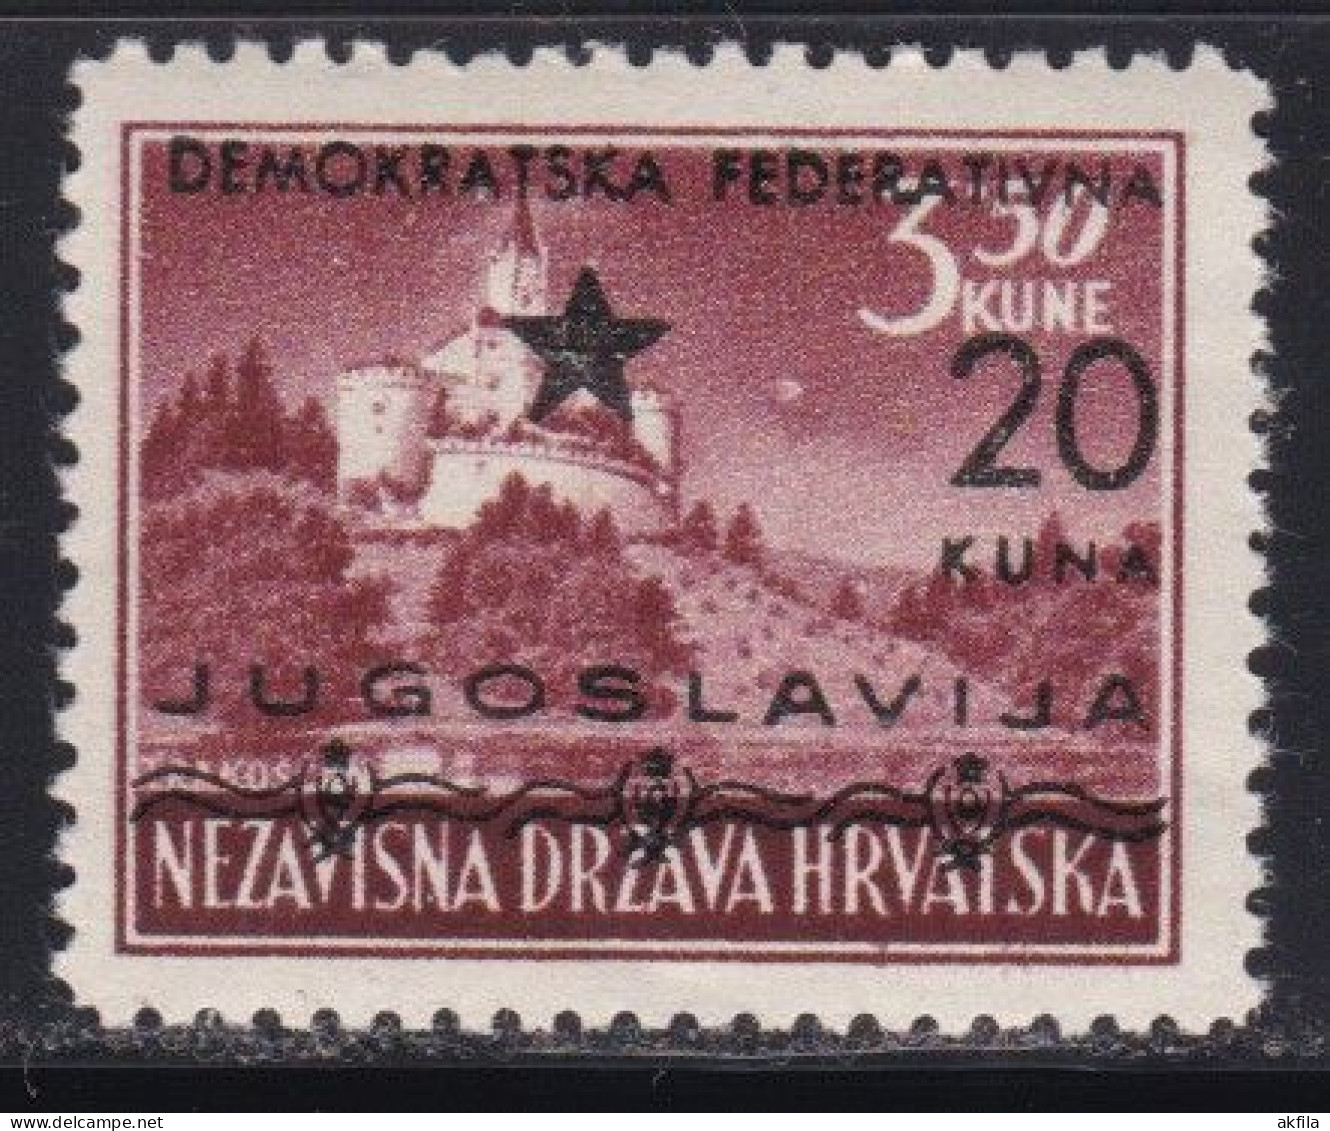 Yugoslavia 1945 Croatia Split, Auxiliary Edition, Value Of HRK 20/3.50, Pair Offset, MNH - Nuovi